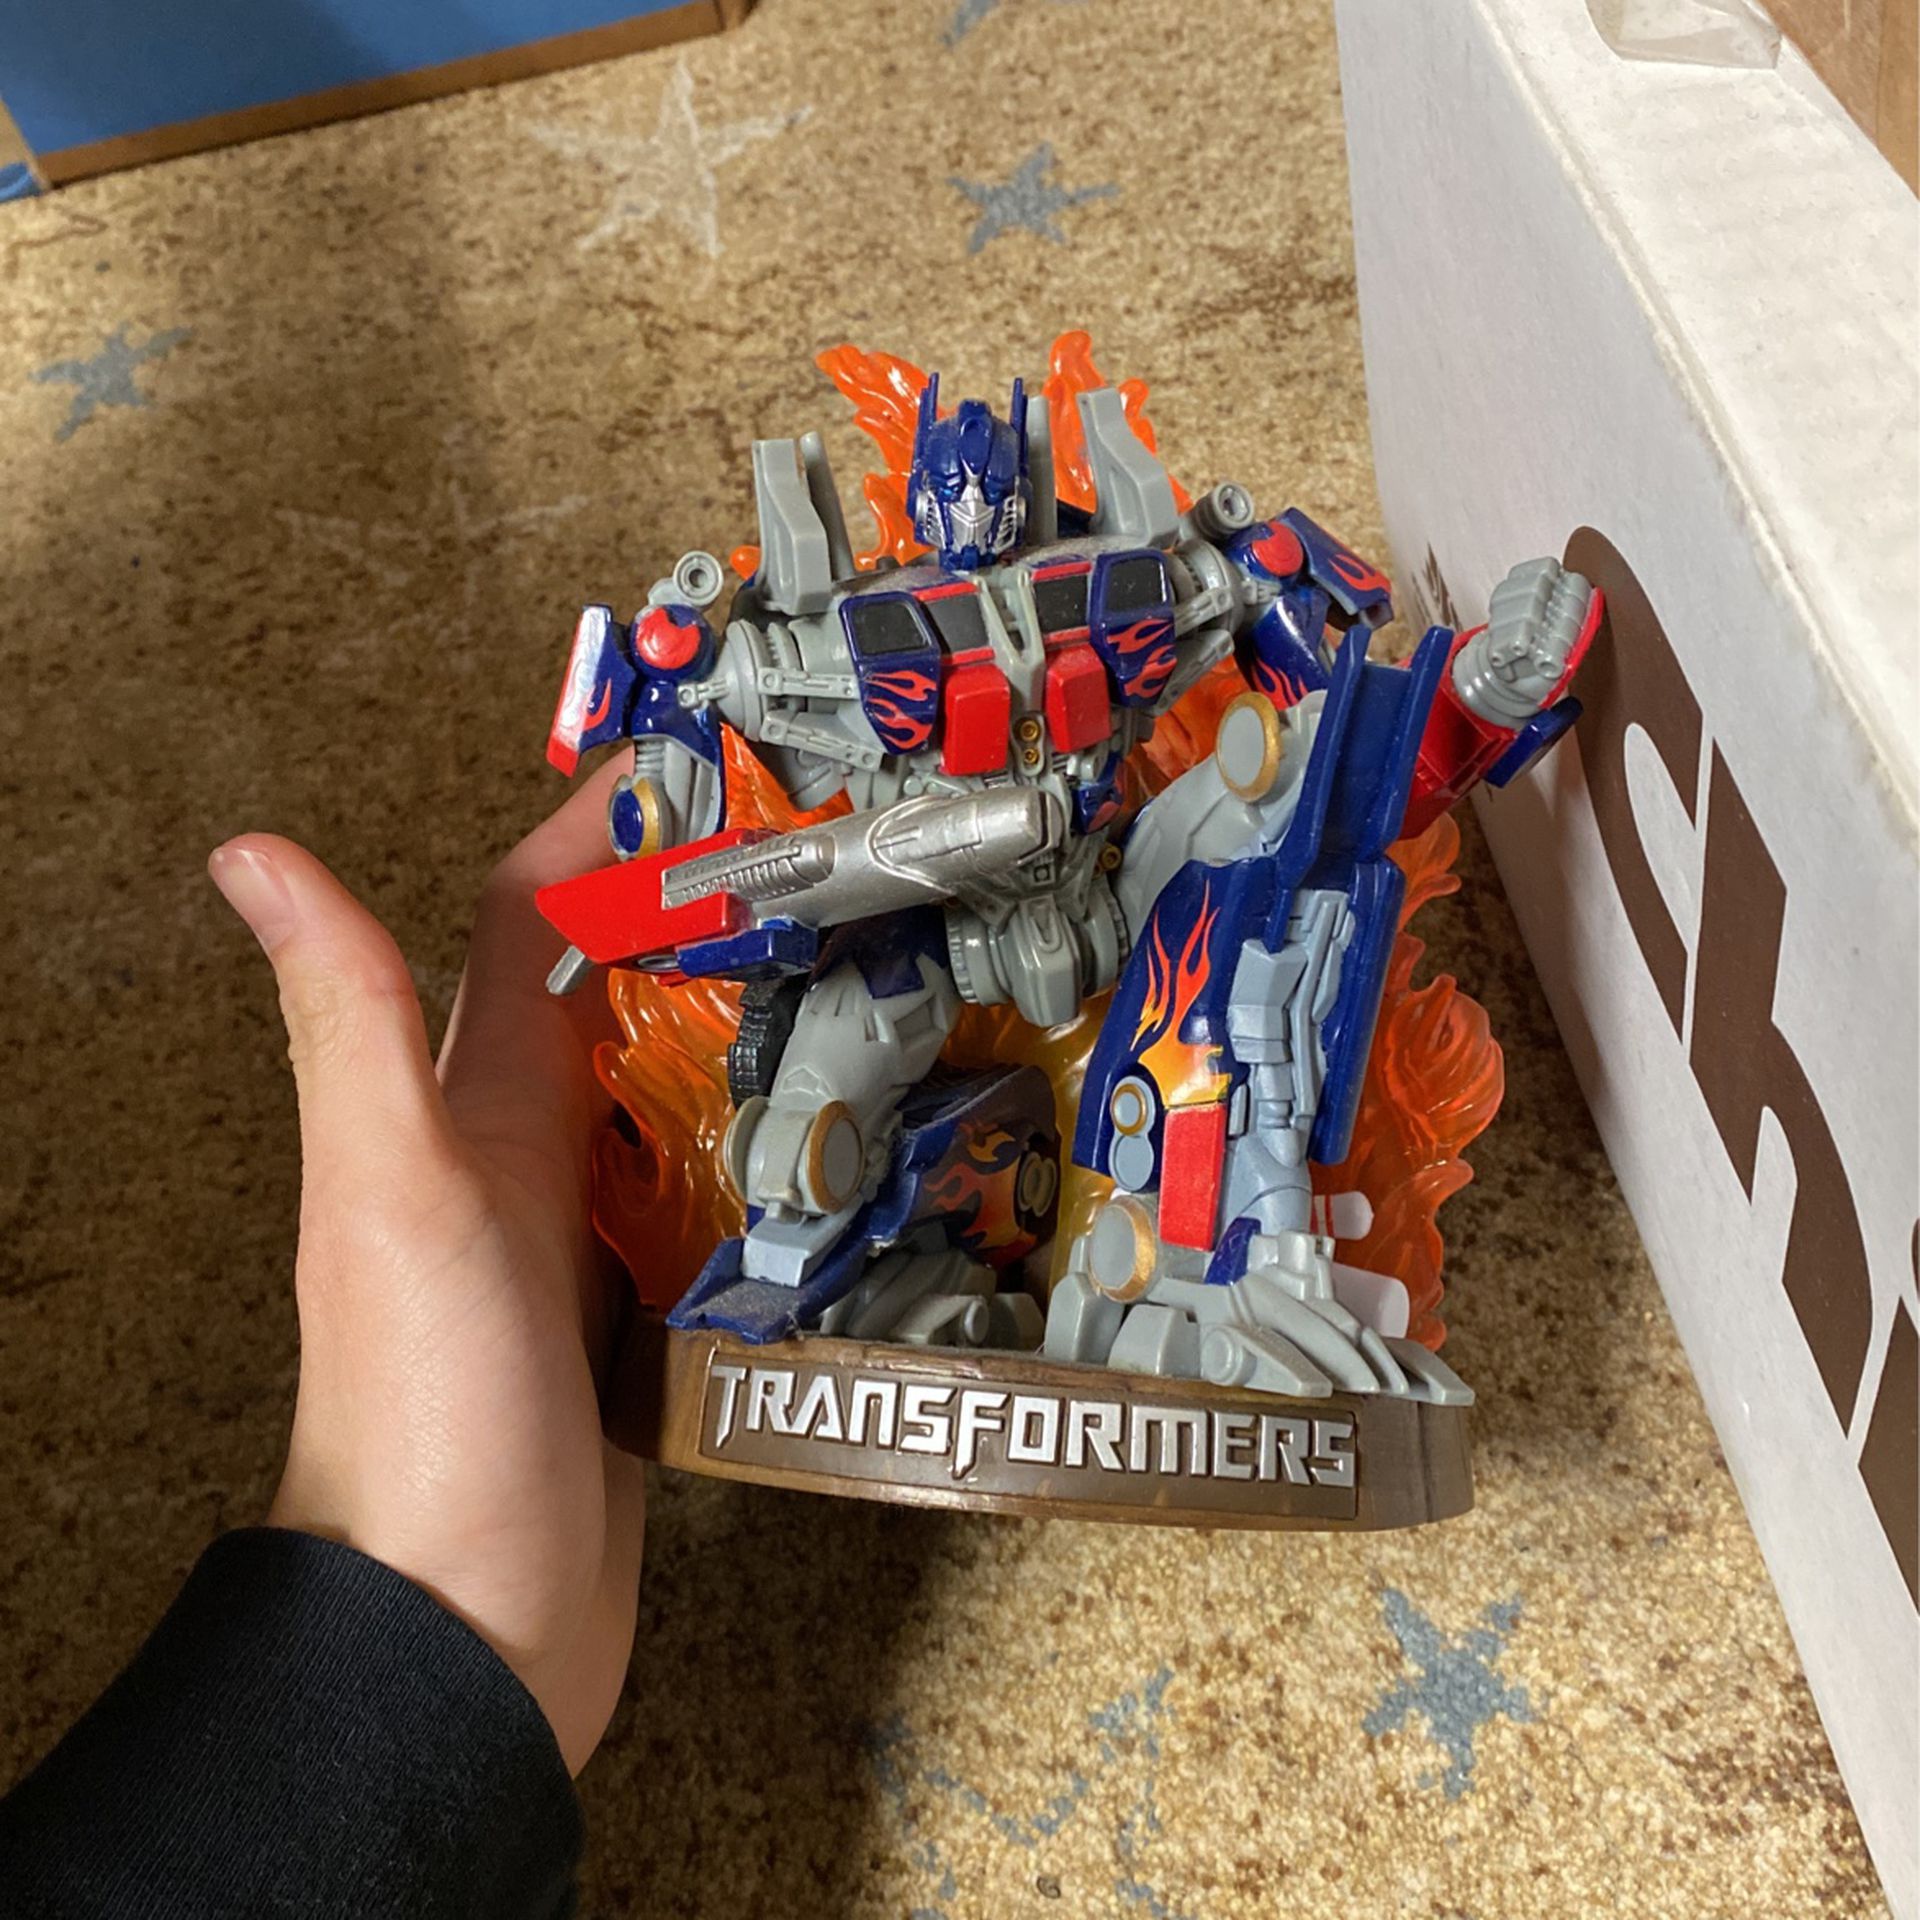 Transformers Optimis Prime Hasbro Toy